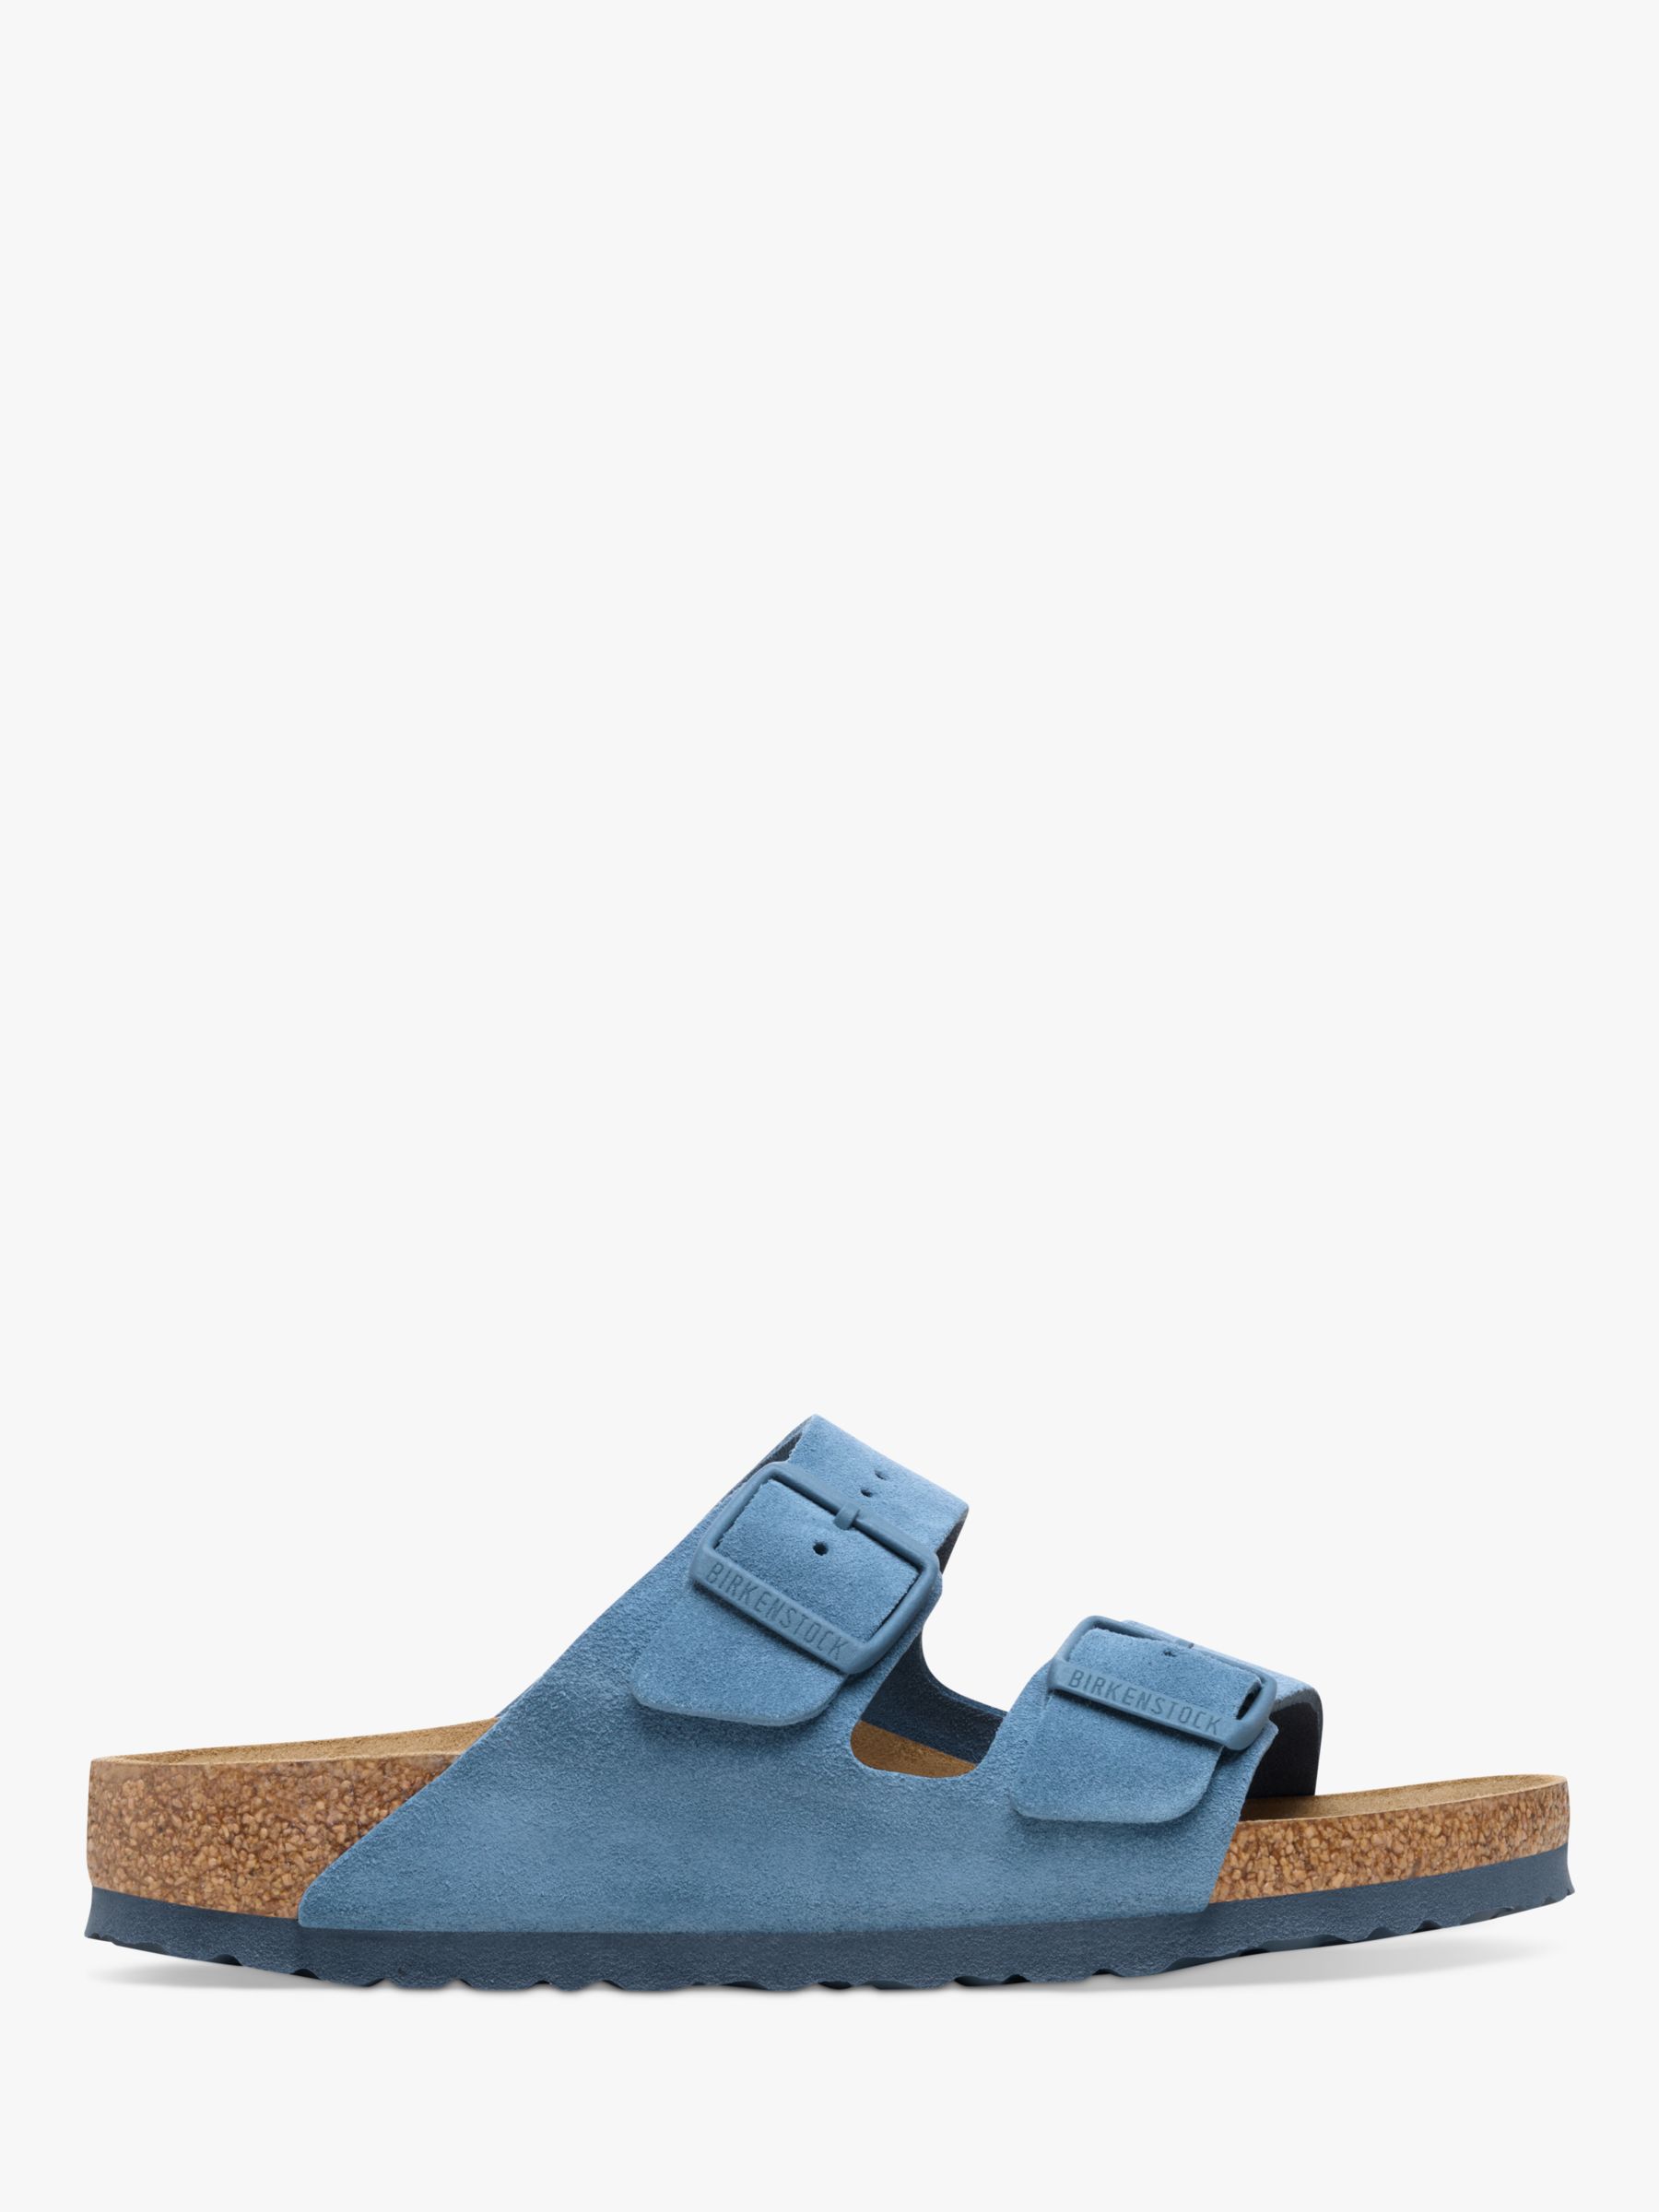 Birkenstock Arizona Suede Sandals, Elemental Blue, 37